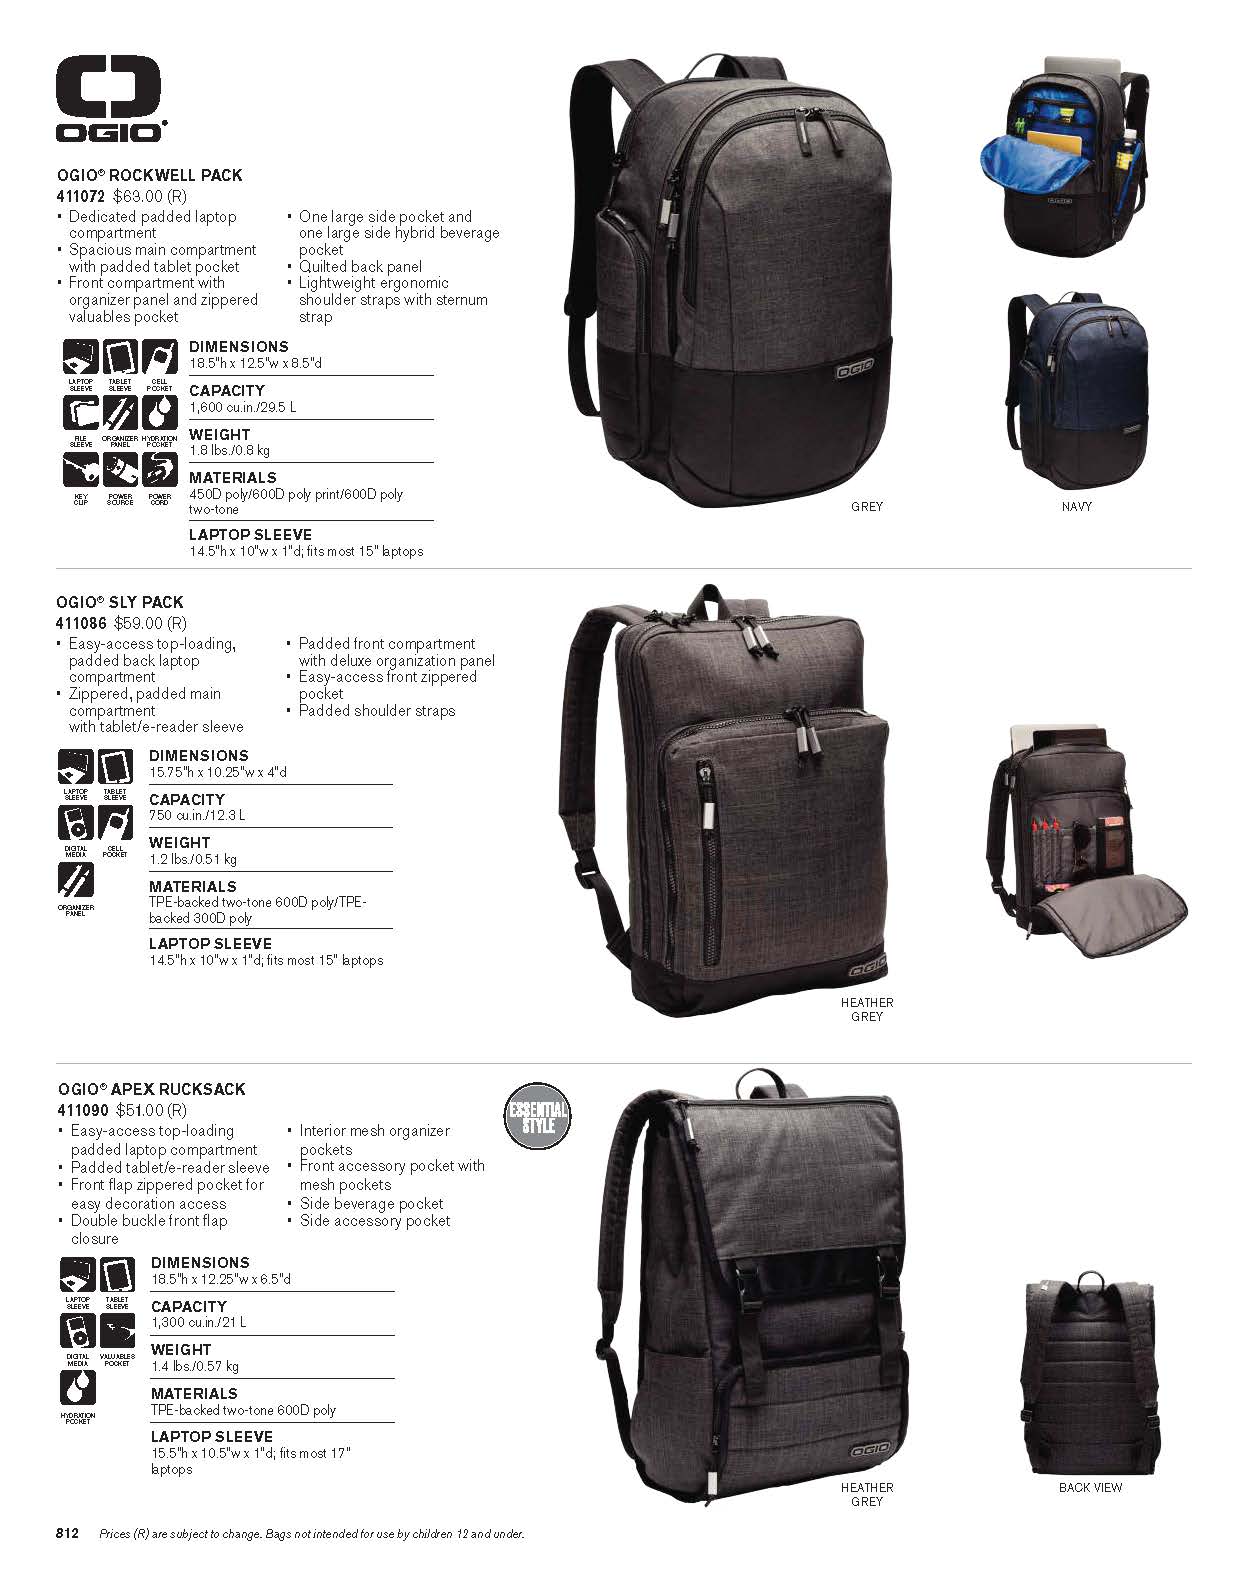 Digital Catalog - merchshop ai Apparel Bags and Caps Essentials – Etchified